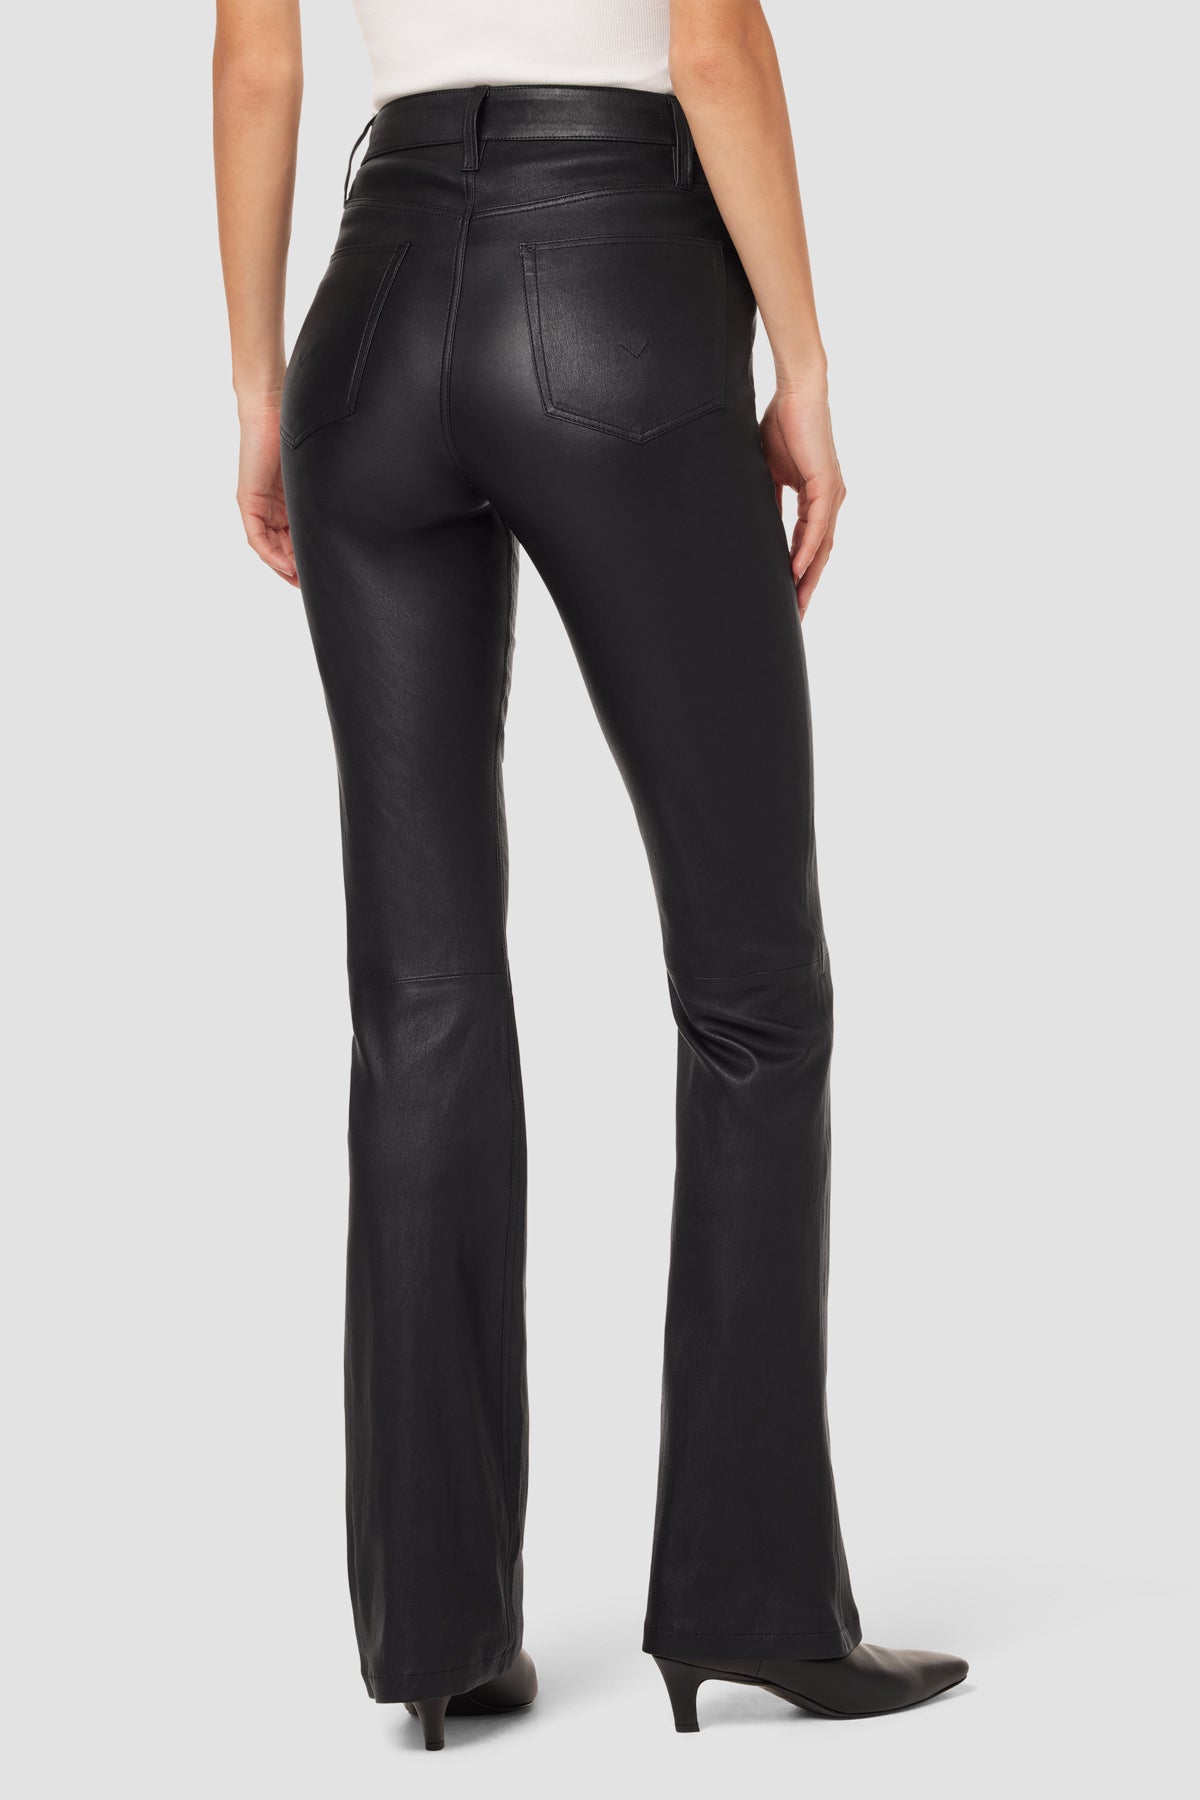 Black V Cut Leather Pants